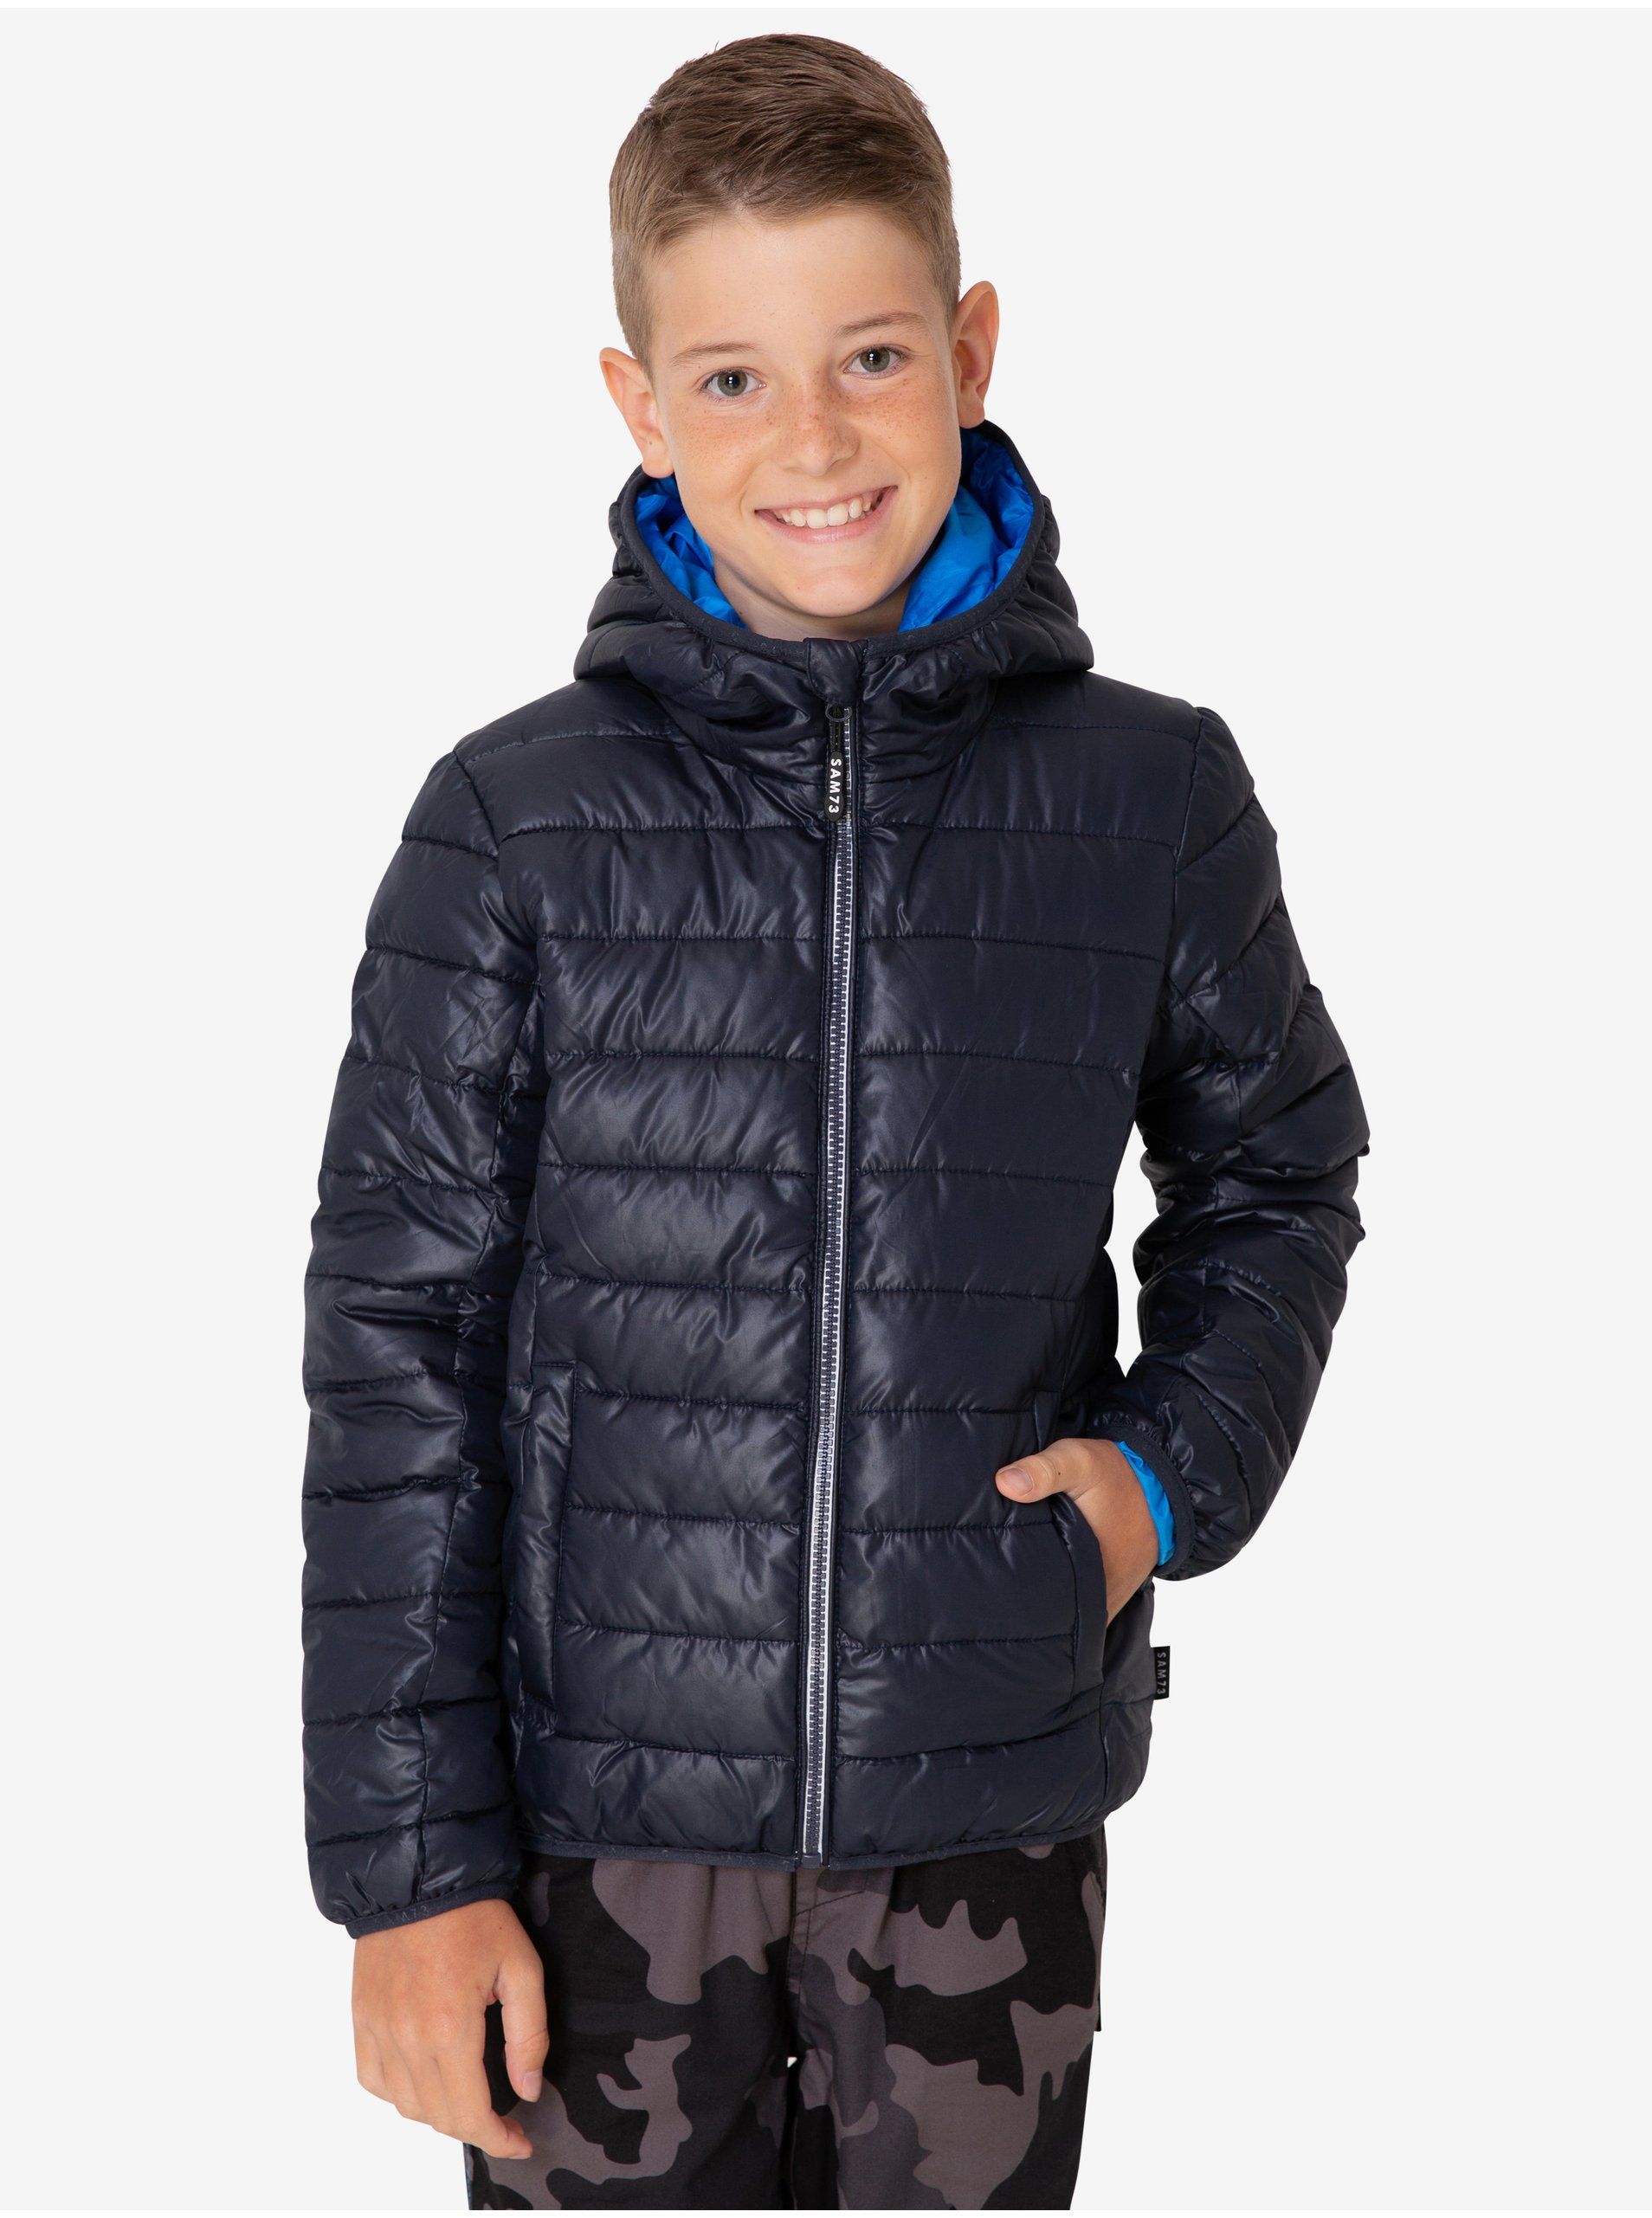 Lacno Tmavomodrá chlapčenská prešívaná zimná bunda s kapucňou SAM 73 Jonah